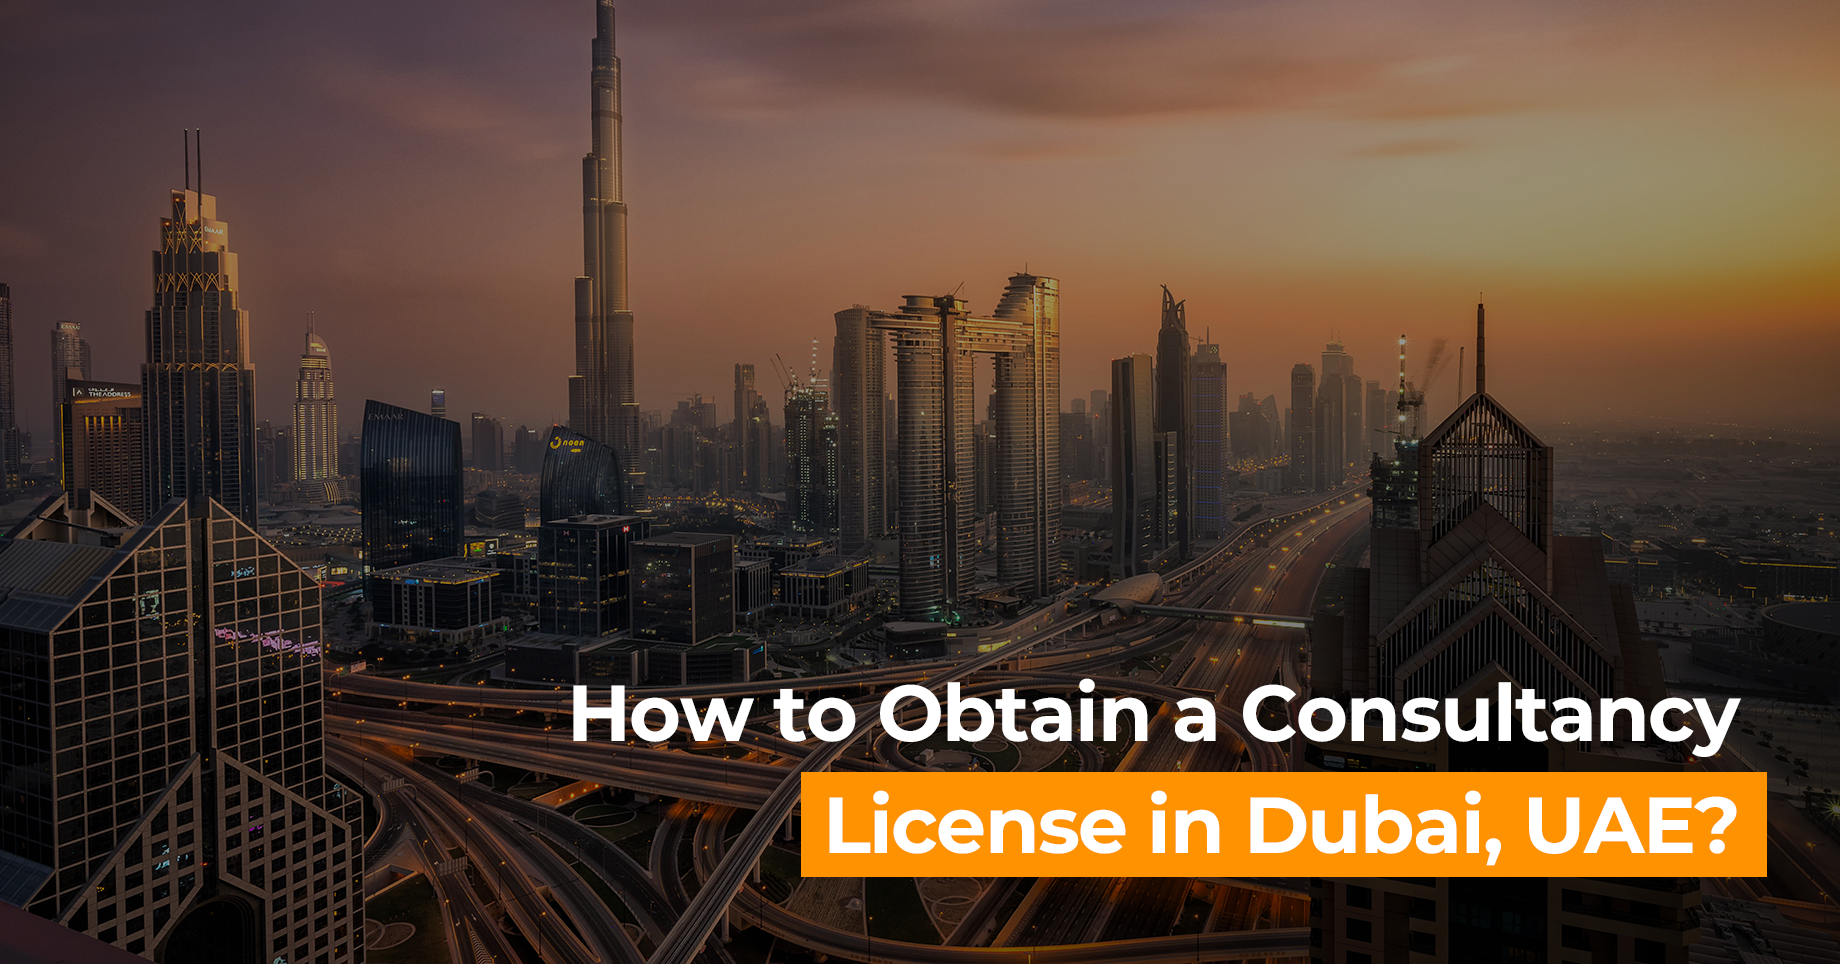 How to Obtain a Consultancy License in Dubai, UAE?